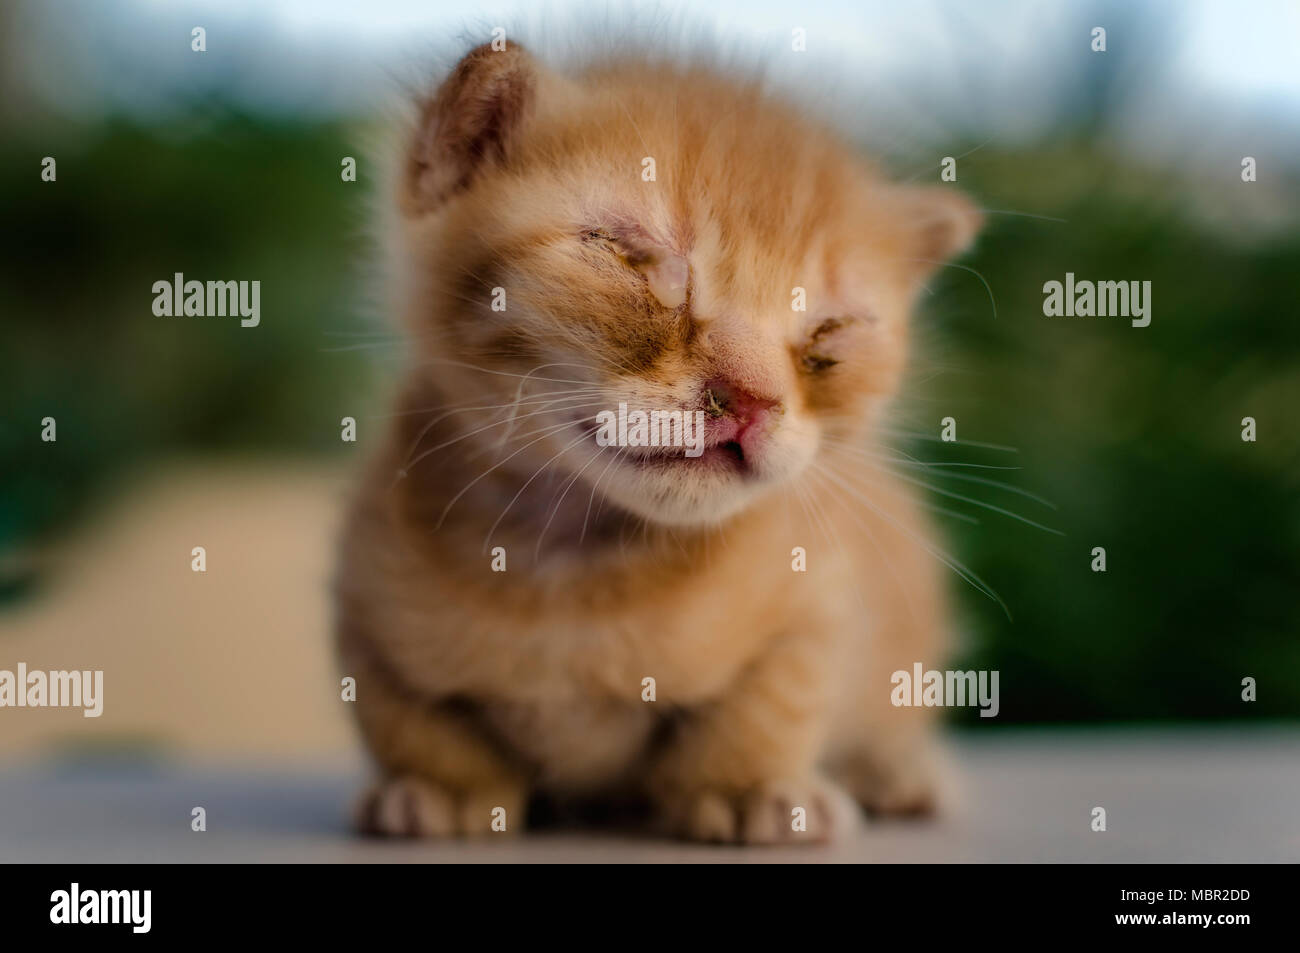 Close up portrait of a cute newborn cat in natural environment Stock Photo